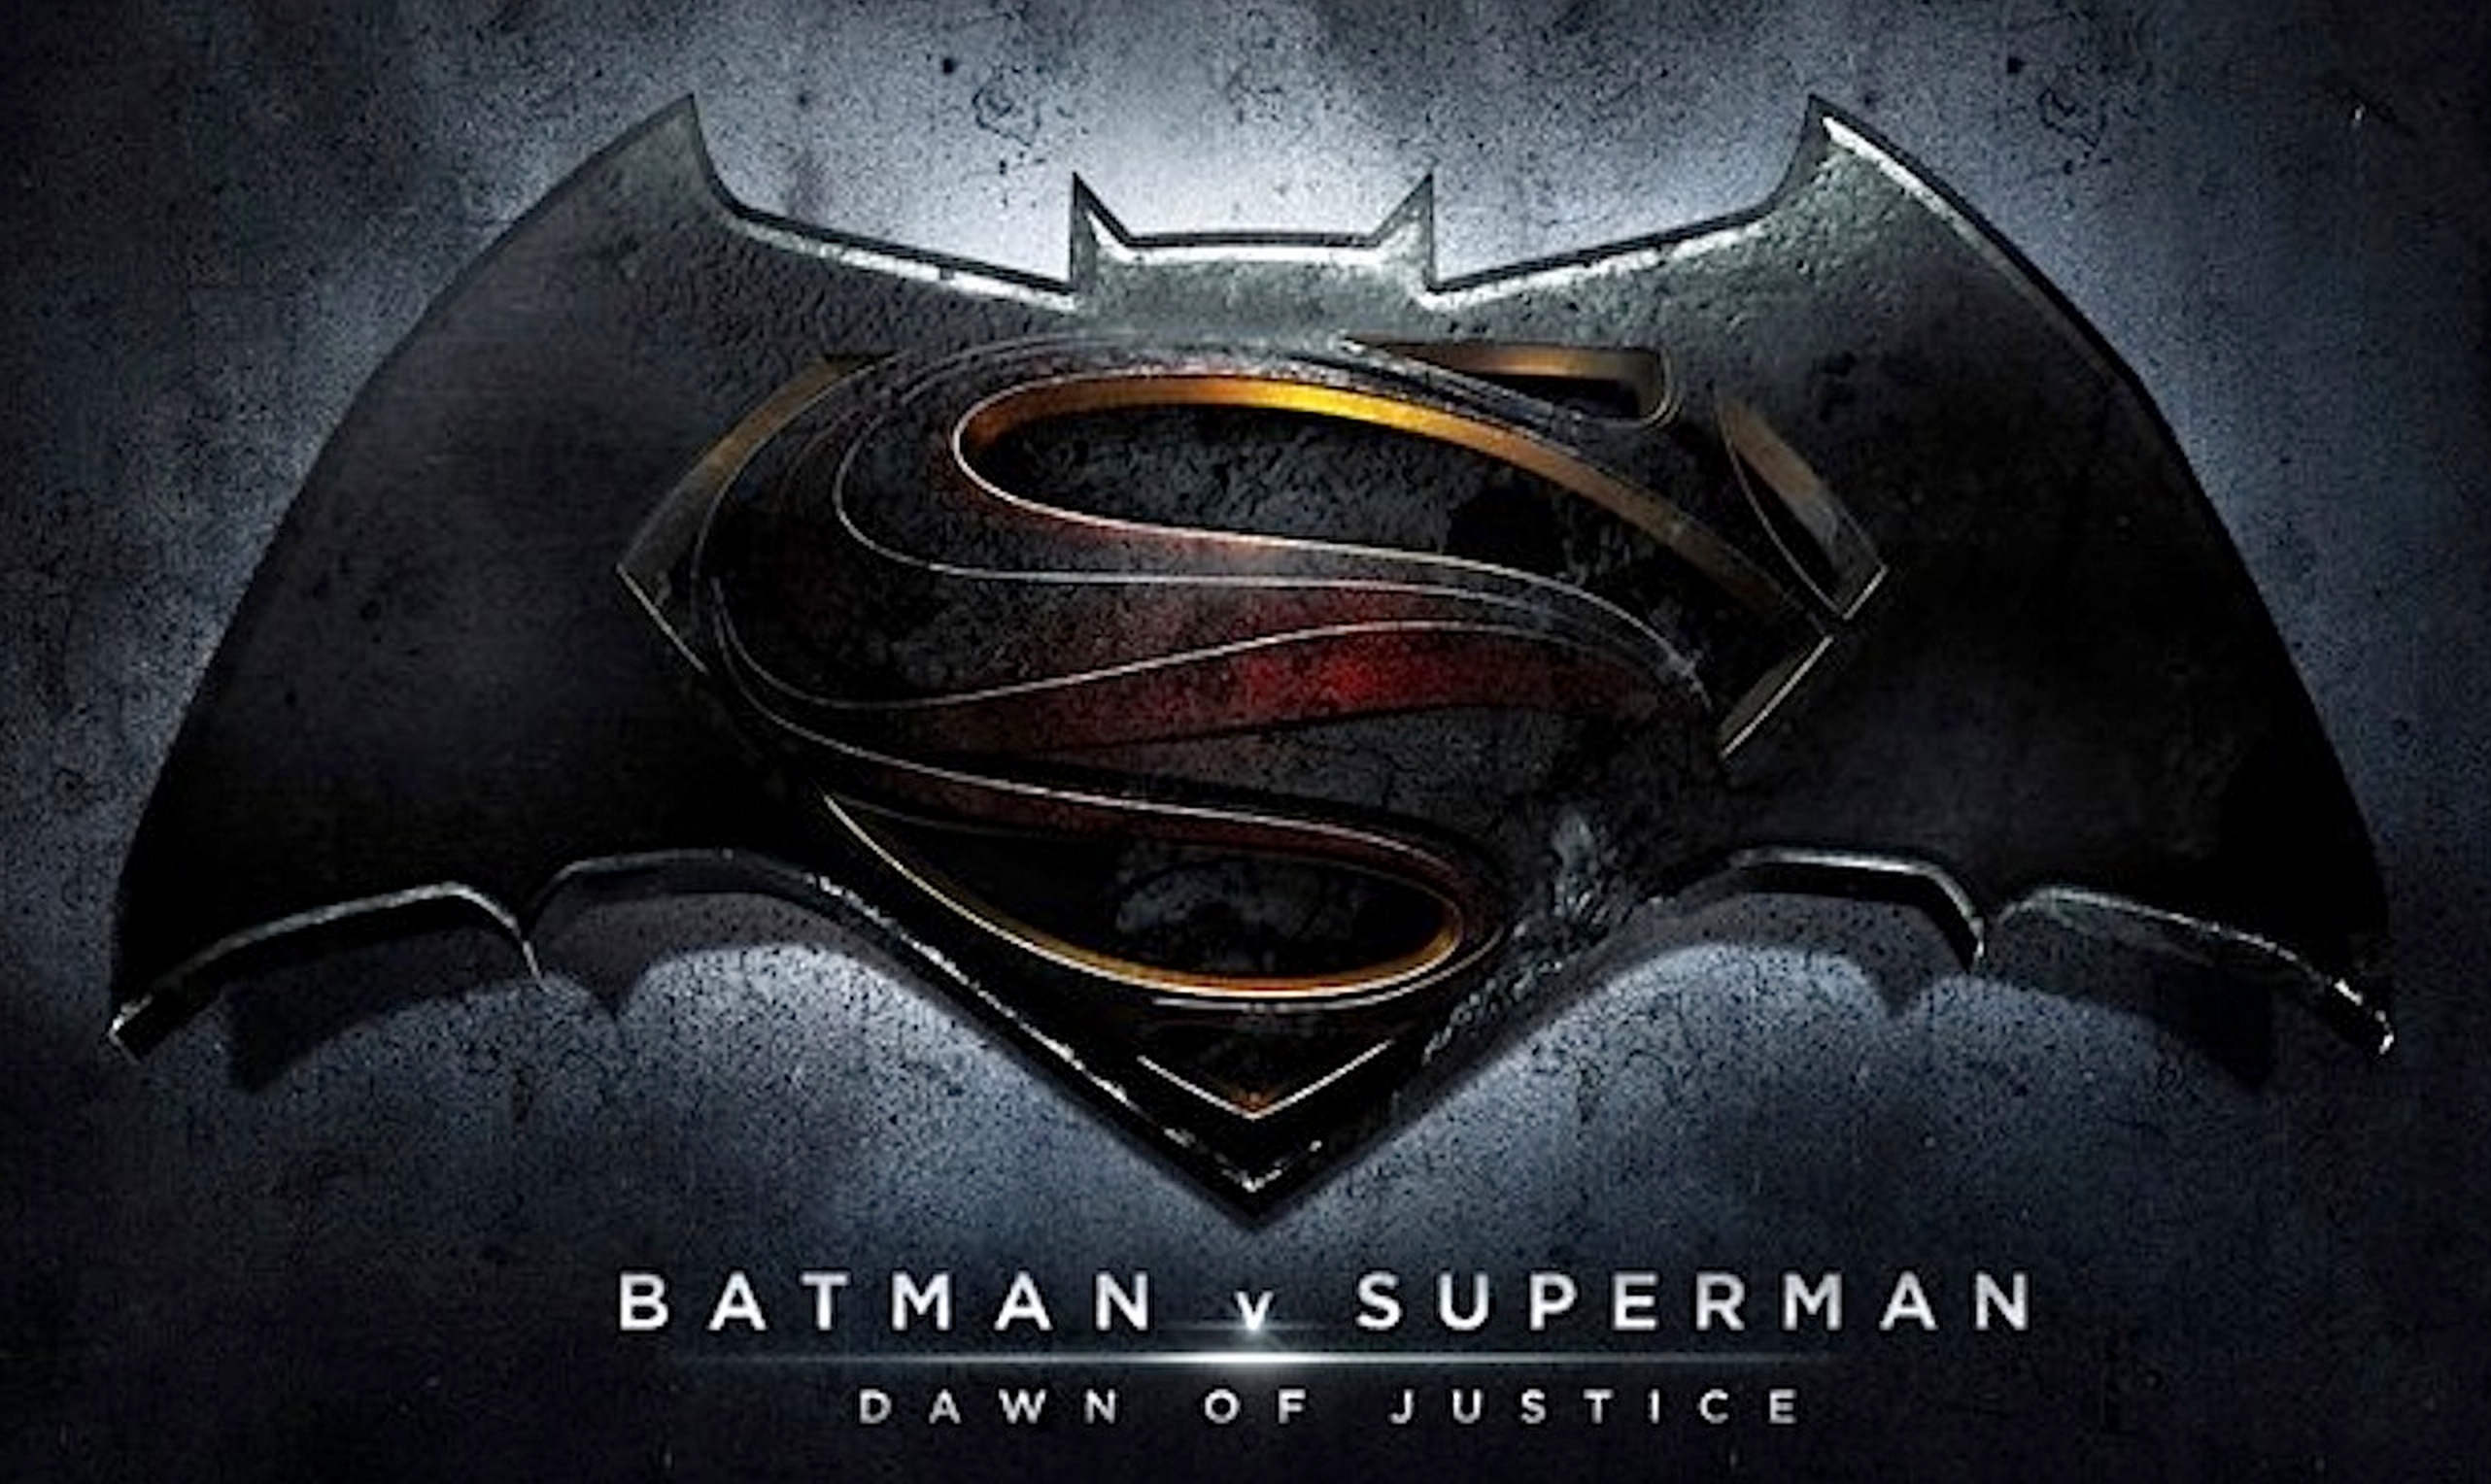 Batman v Superman Dawn of Justice affiche